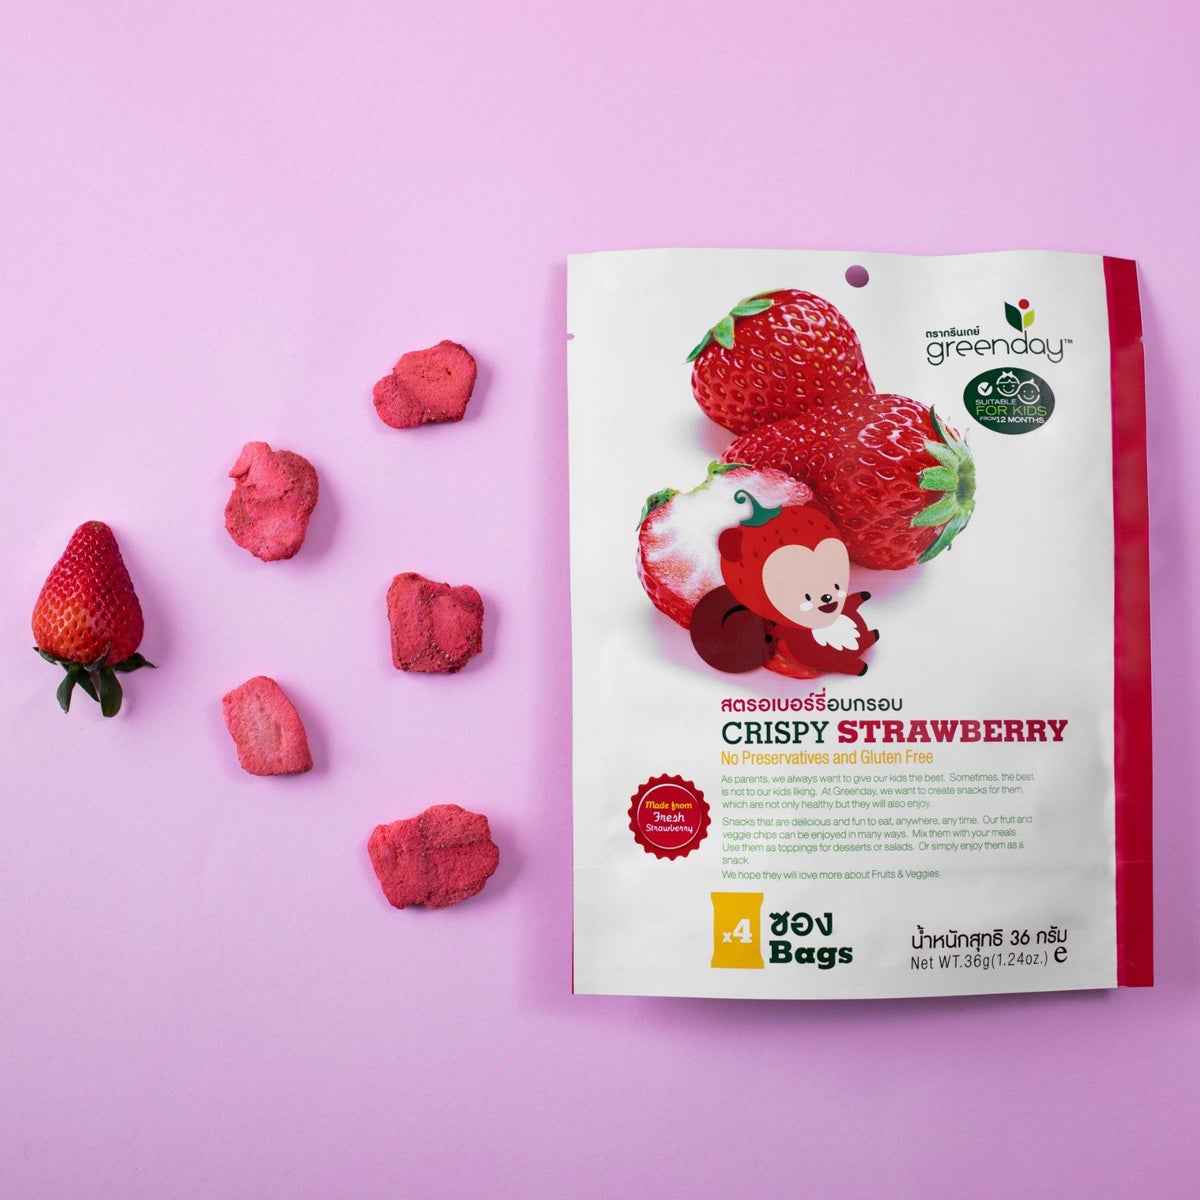 Greenday Crispy Strawberry